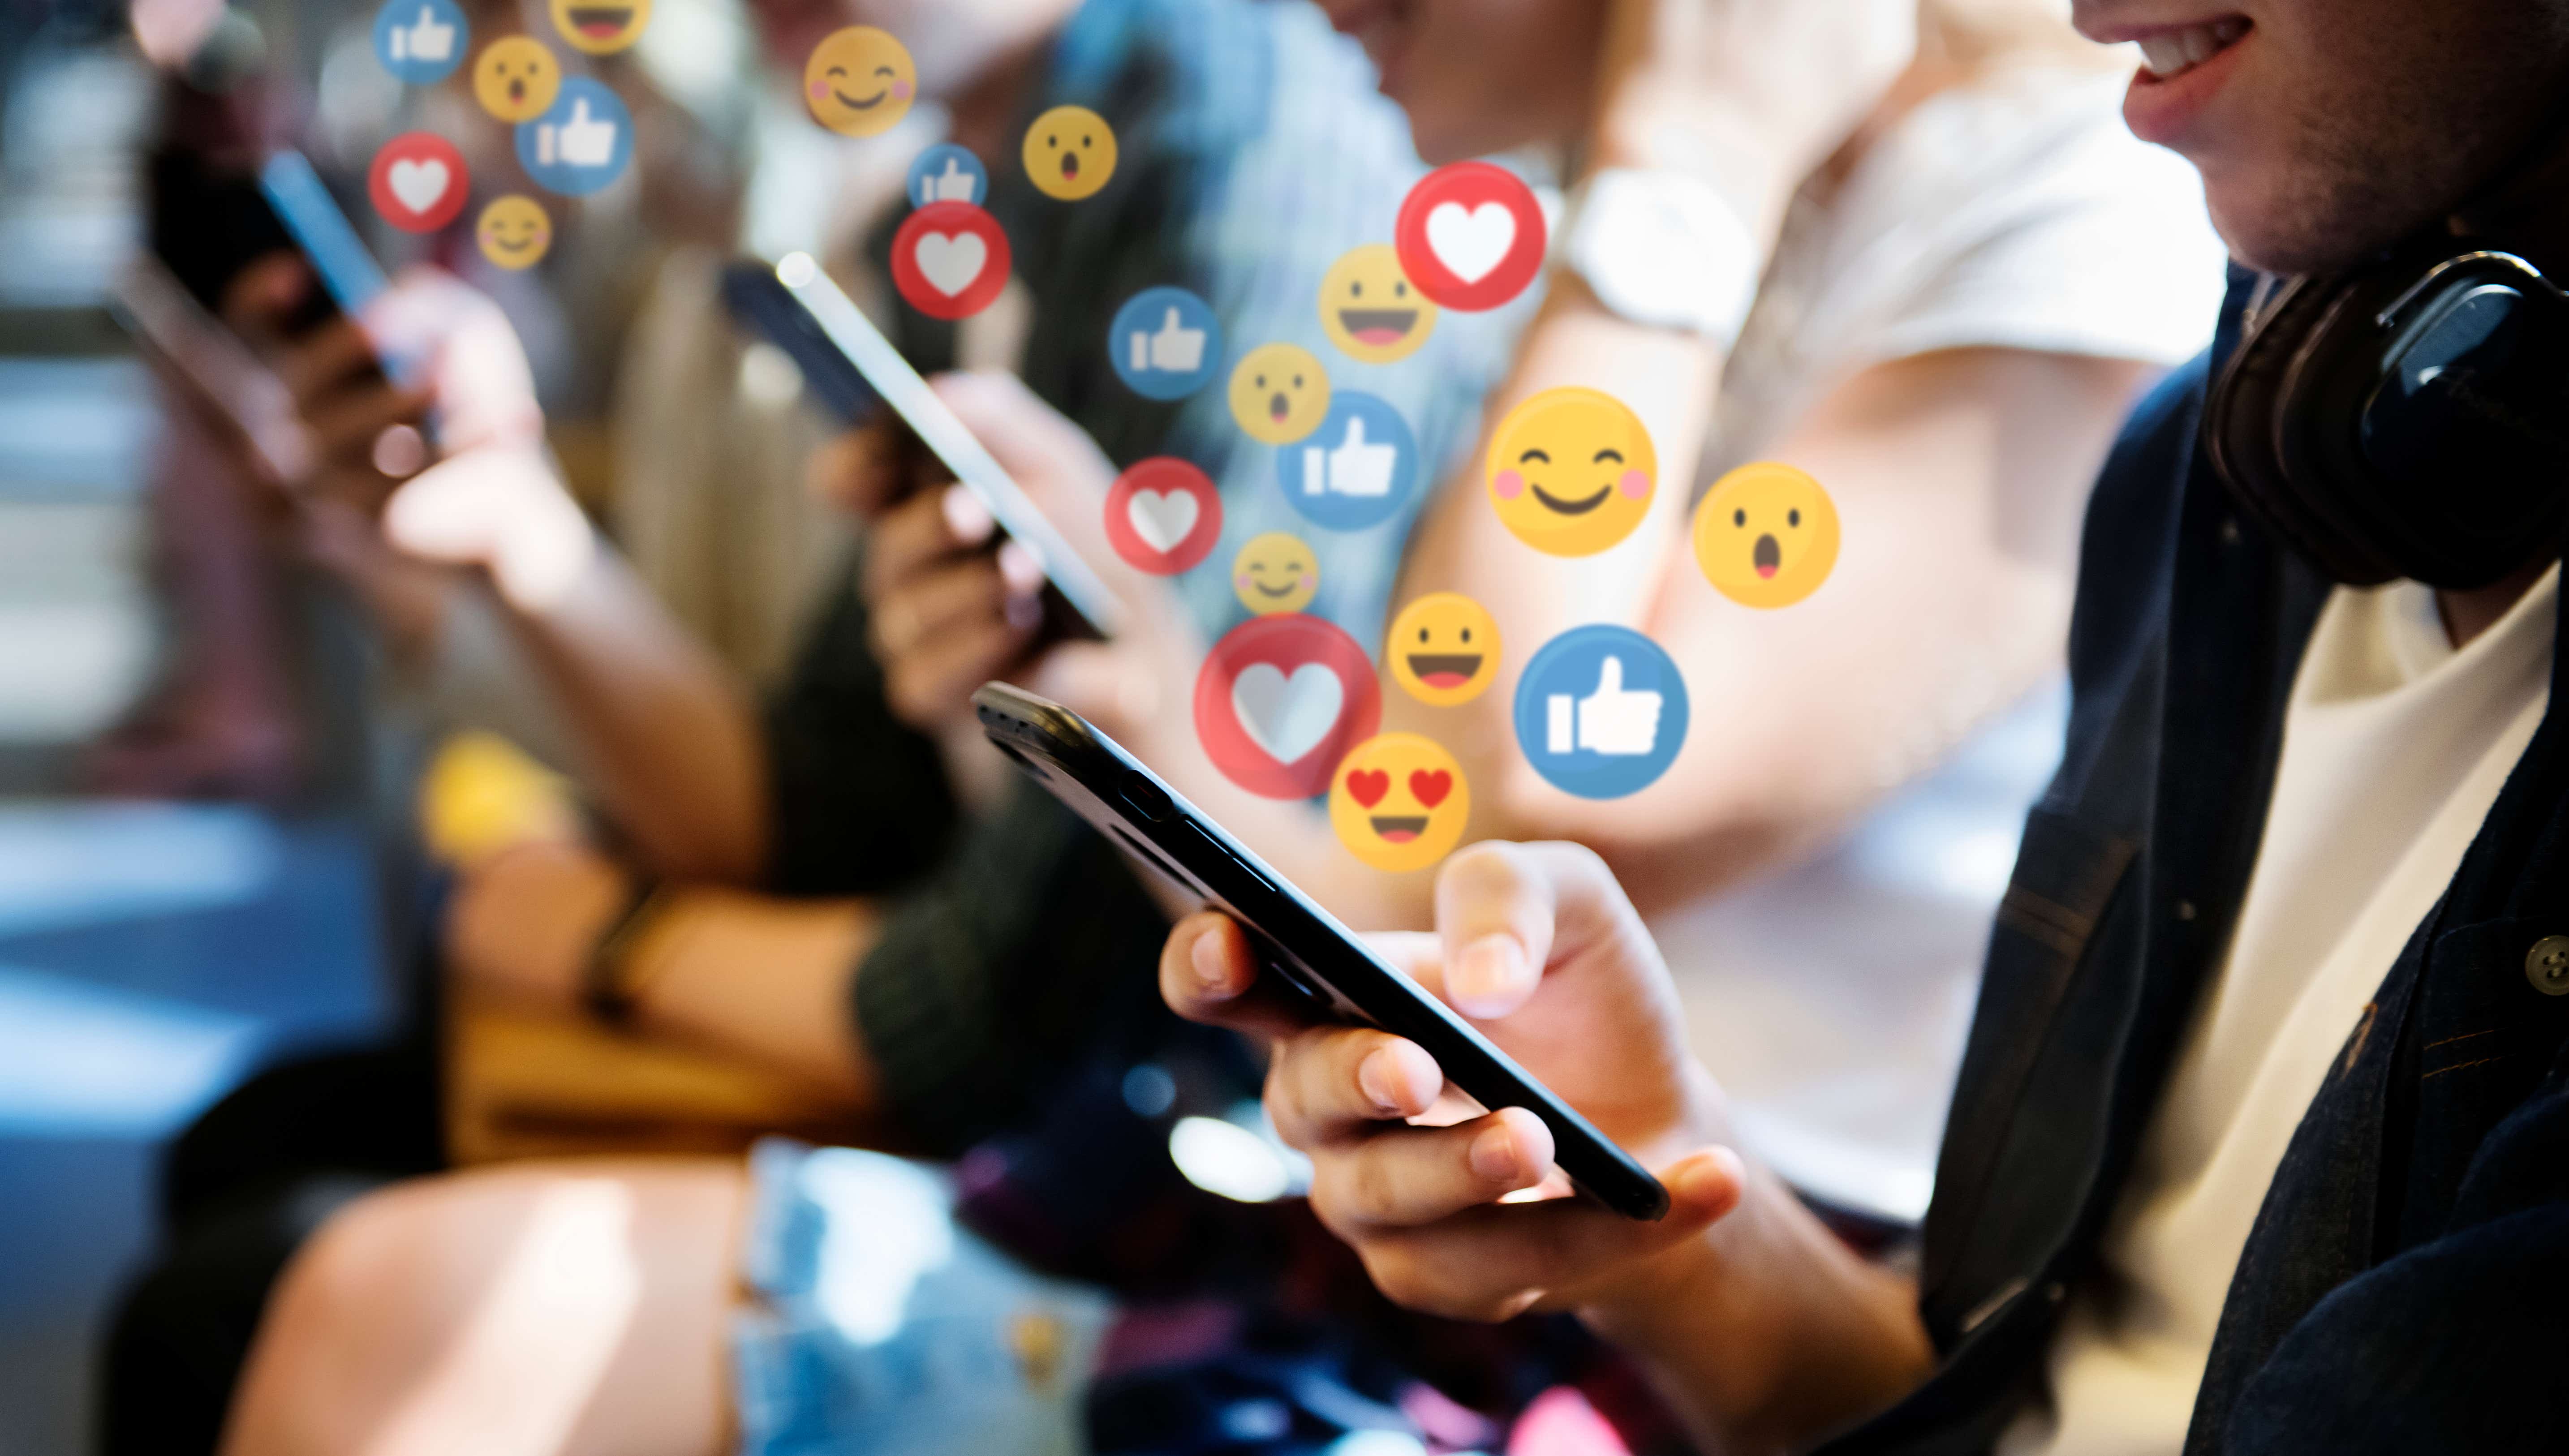 Group of people looking at phones with social emojis 